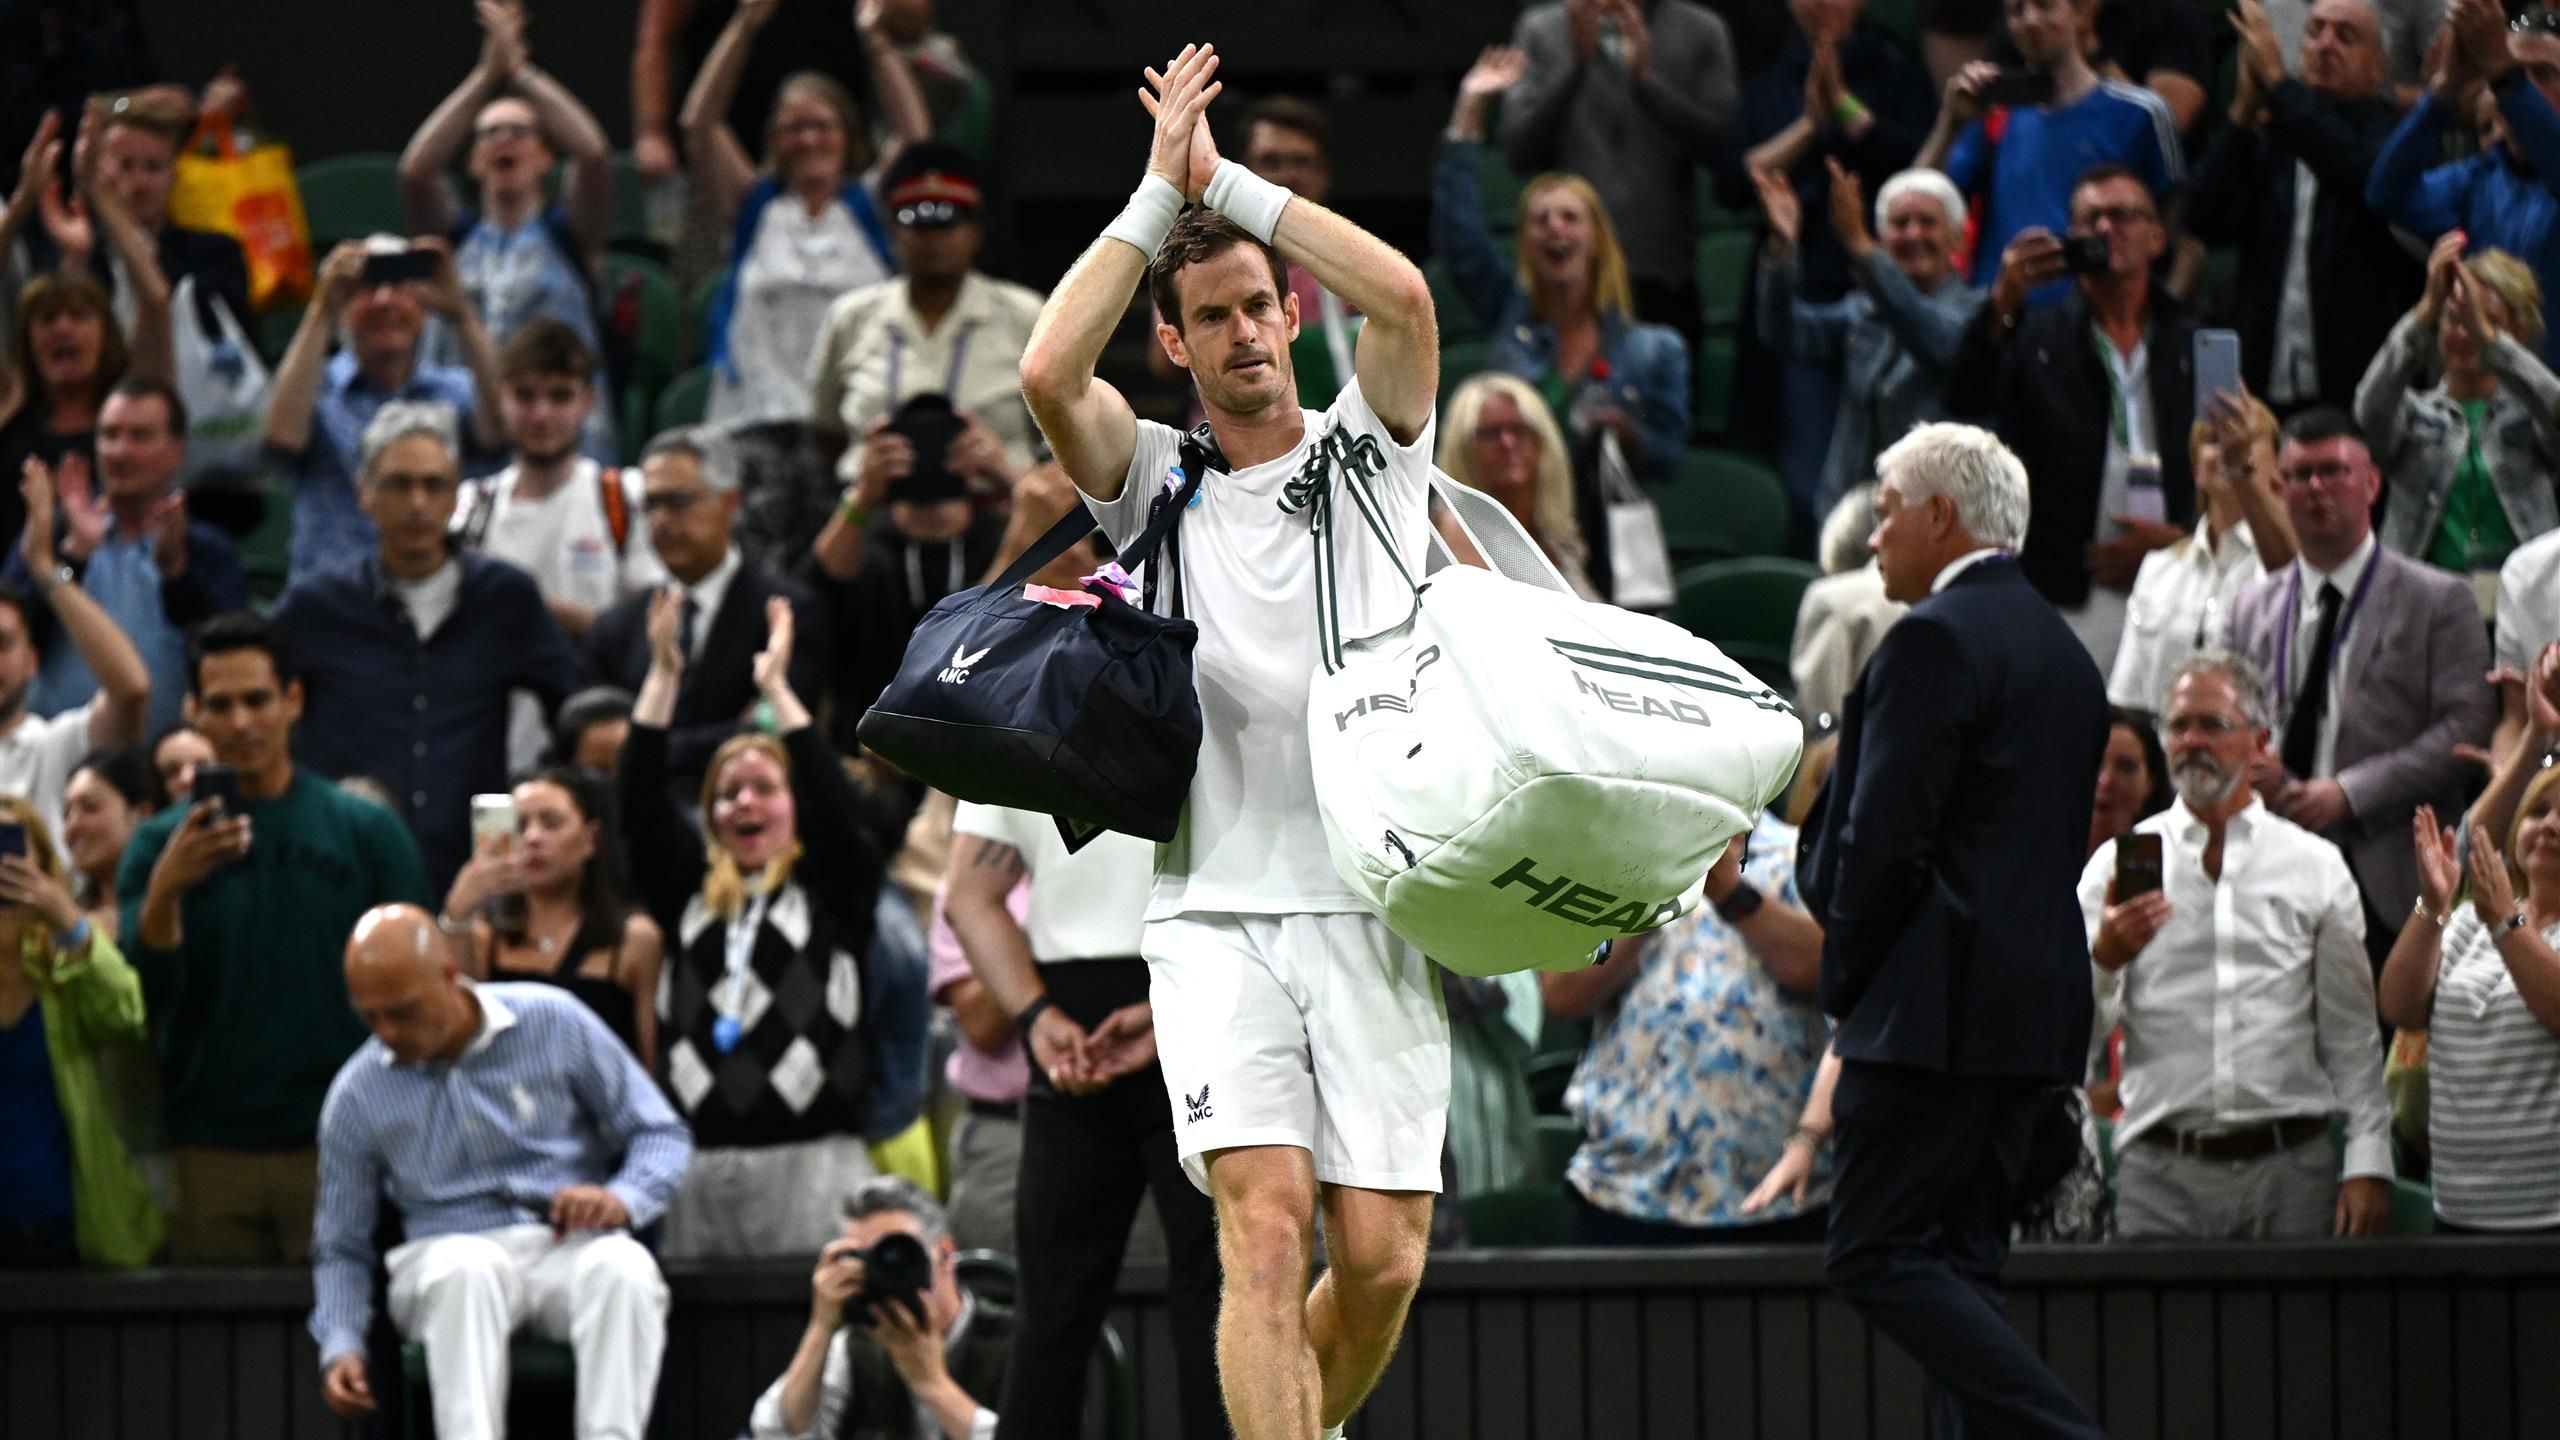 Wimbledon 2023 Andy Murray ahead against Stefanos Tsitsipas despite injury scare as curfew halts match